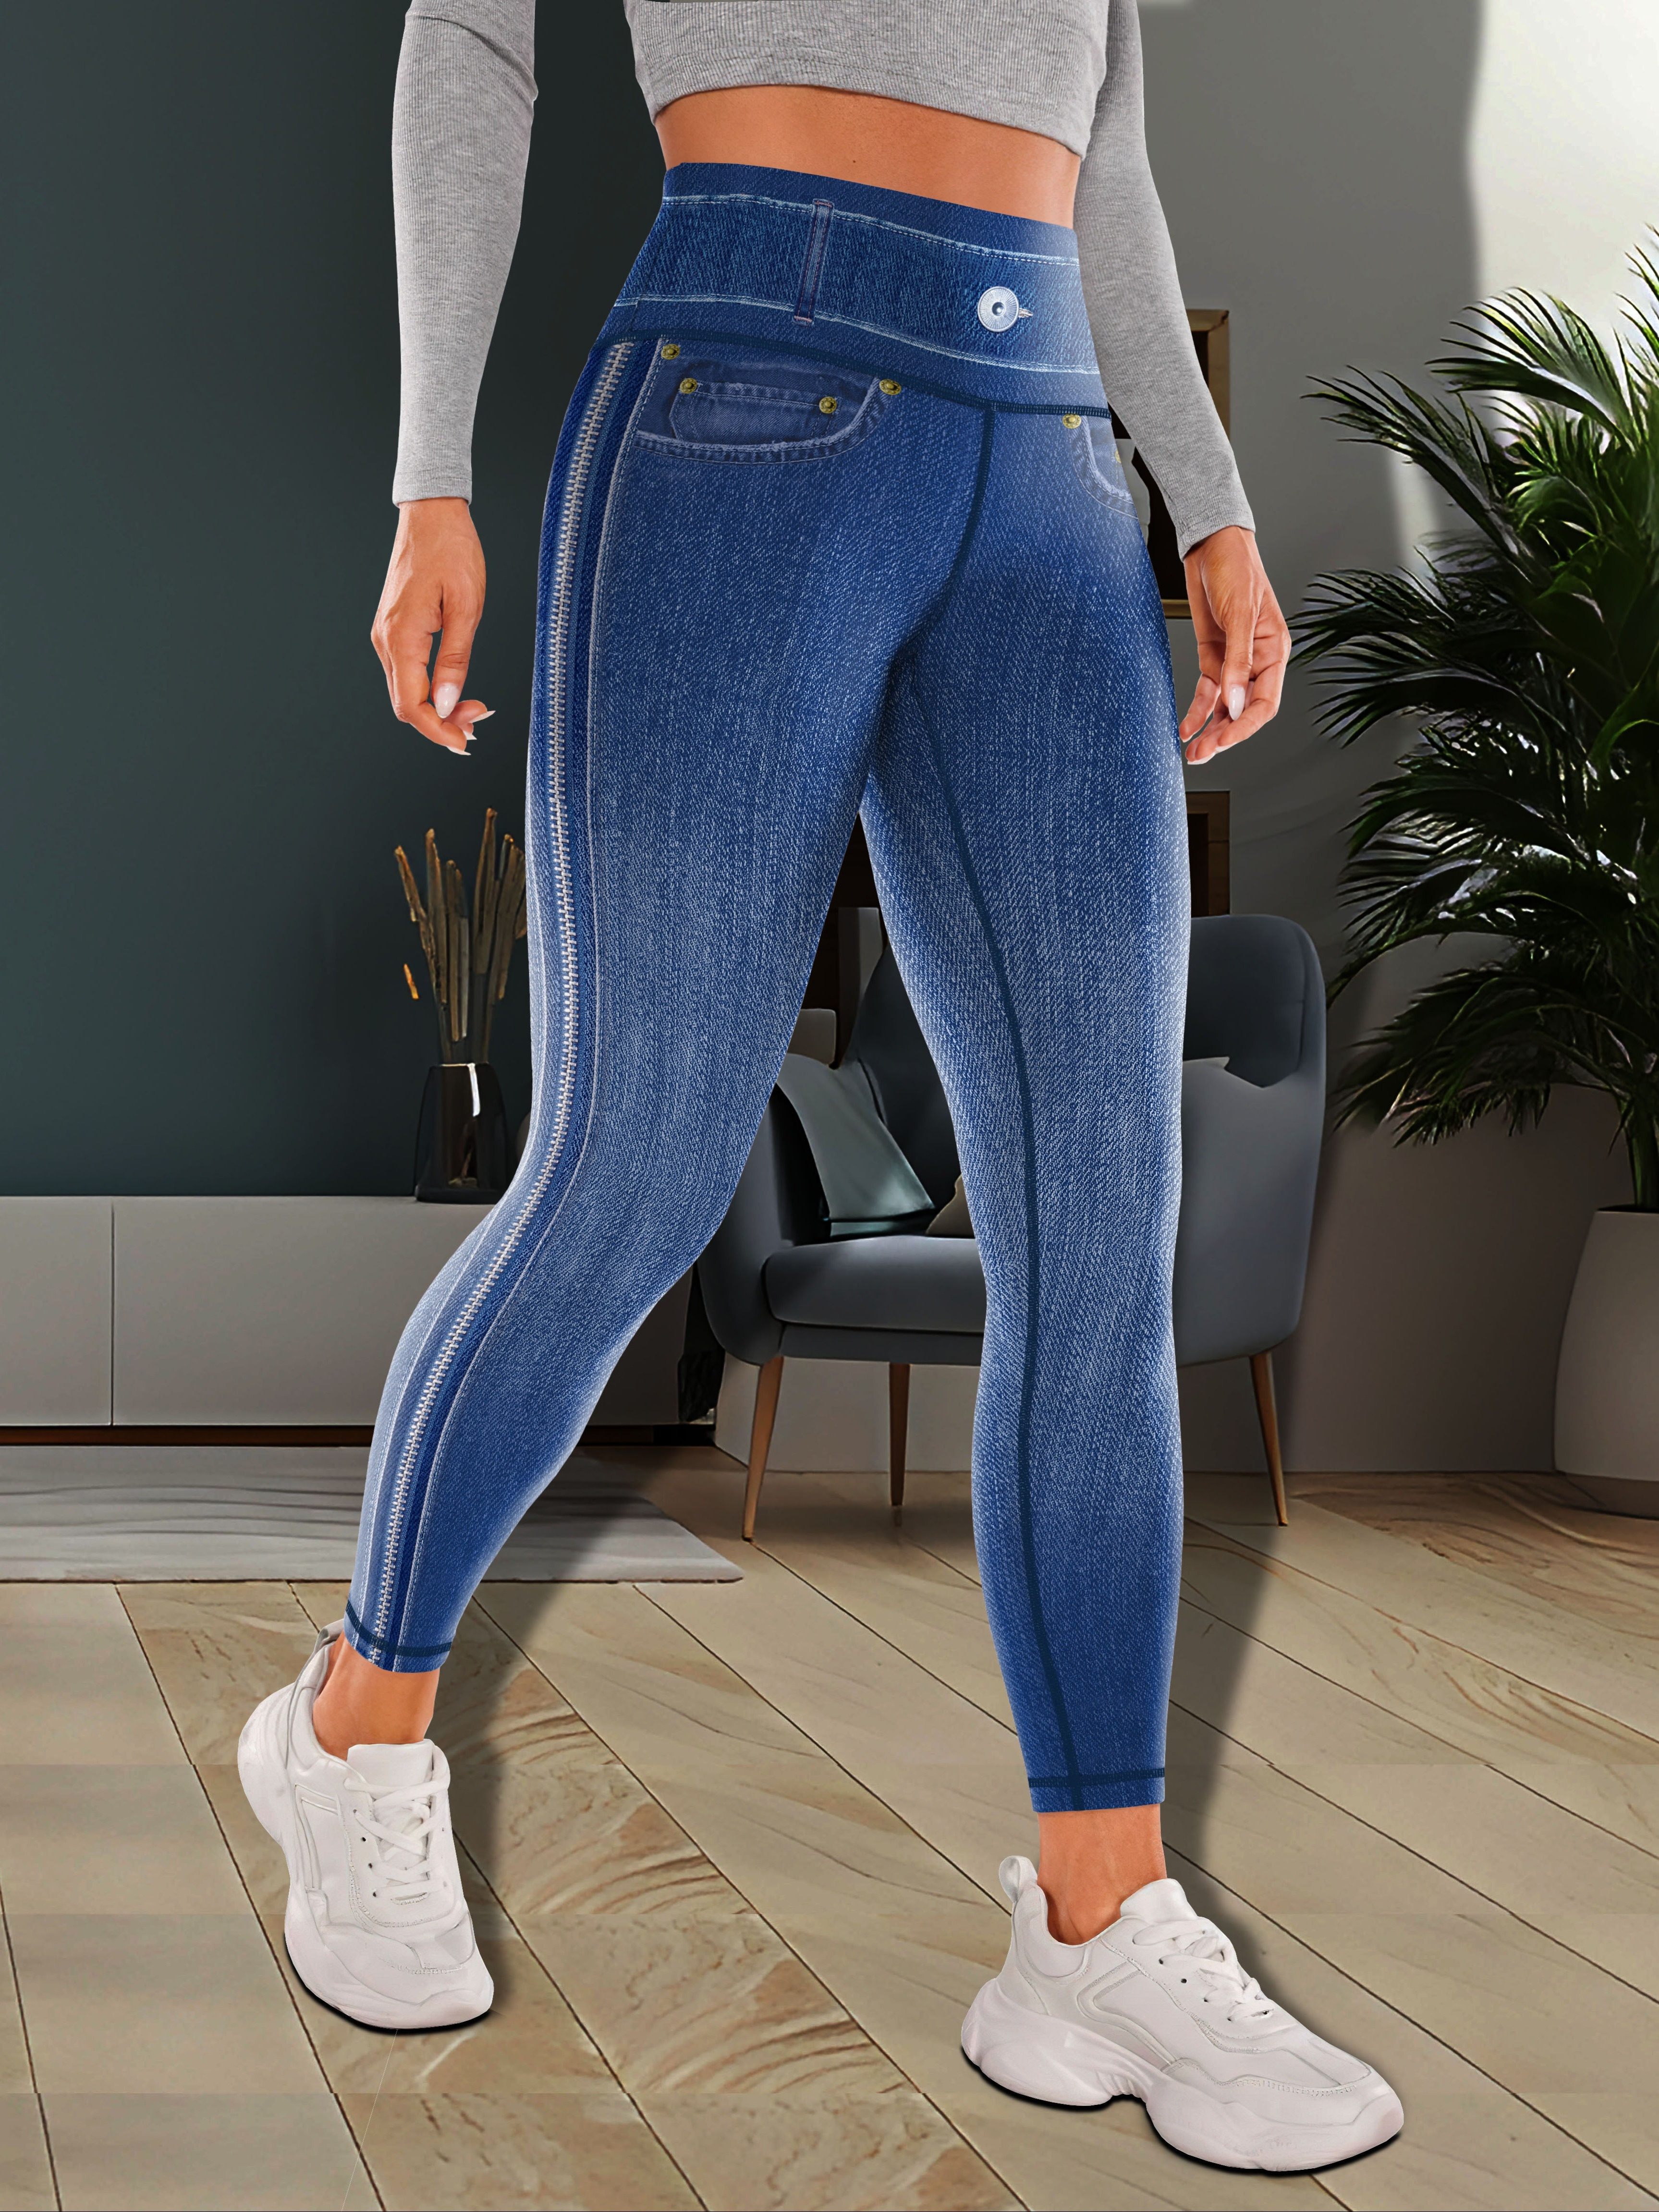 FCCEXIO Acme Galaxy New 3D Print Women Sexy Pants Push Up Running Sports  Leggings Slim Pants Casual Trousers Fitness Legging - AliExpress